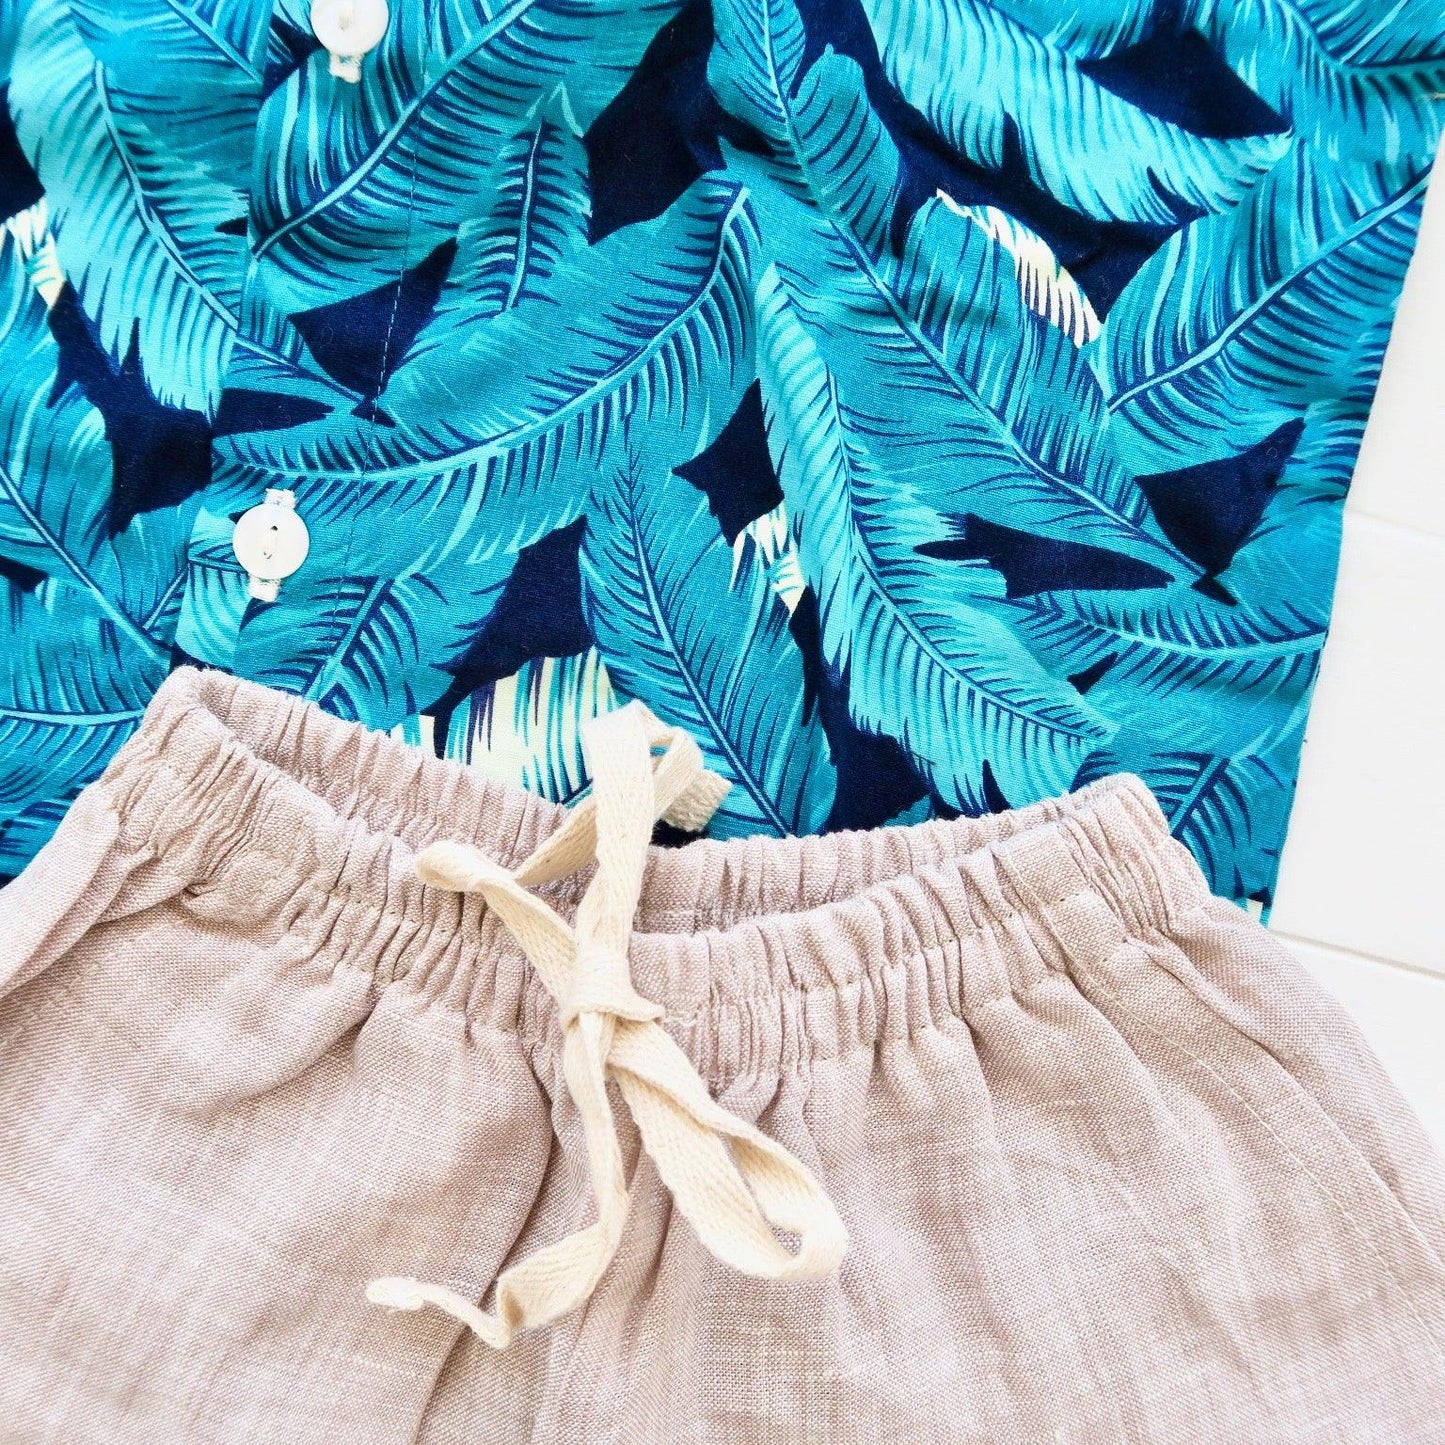 Cedar Top & Shorts in Hawaiian Blue Leaves and Brown Linen - Lil' Tati